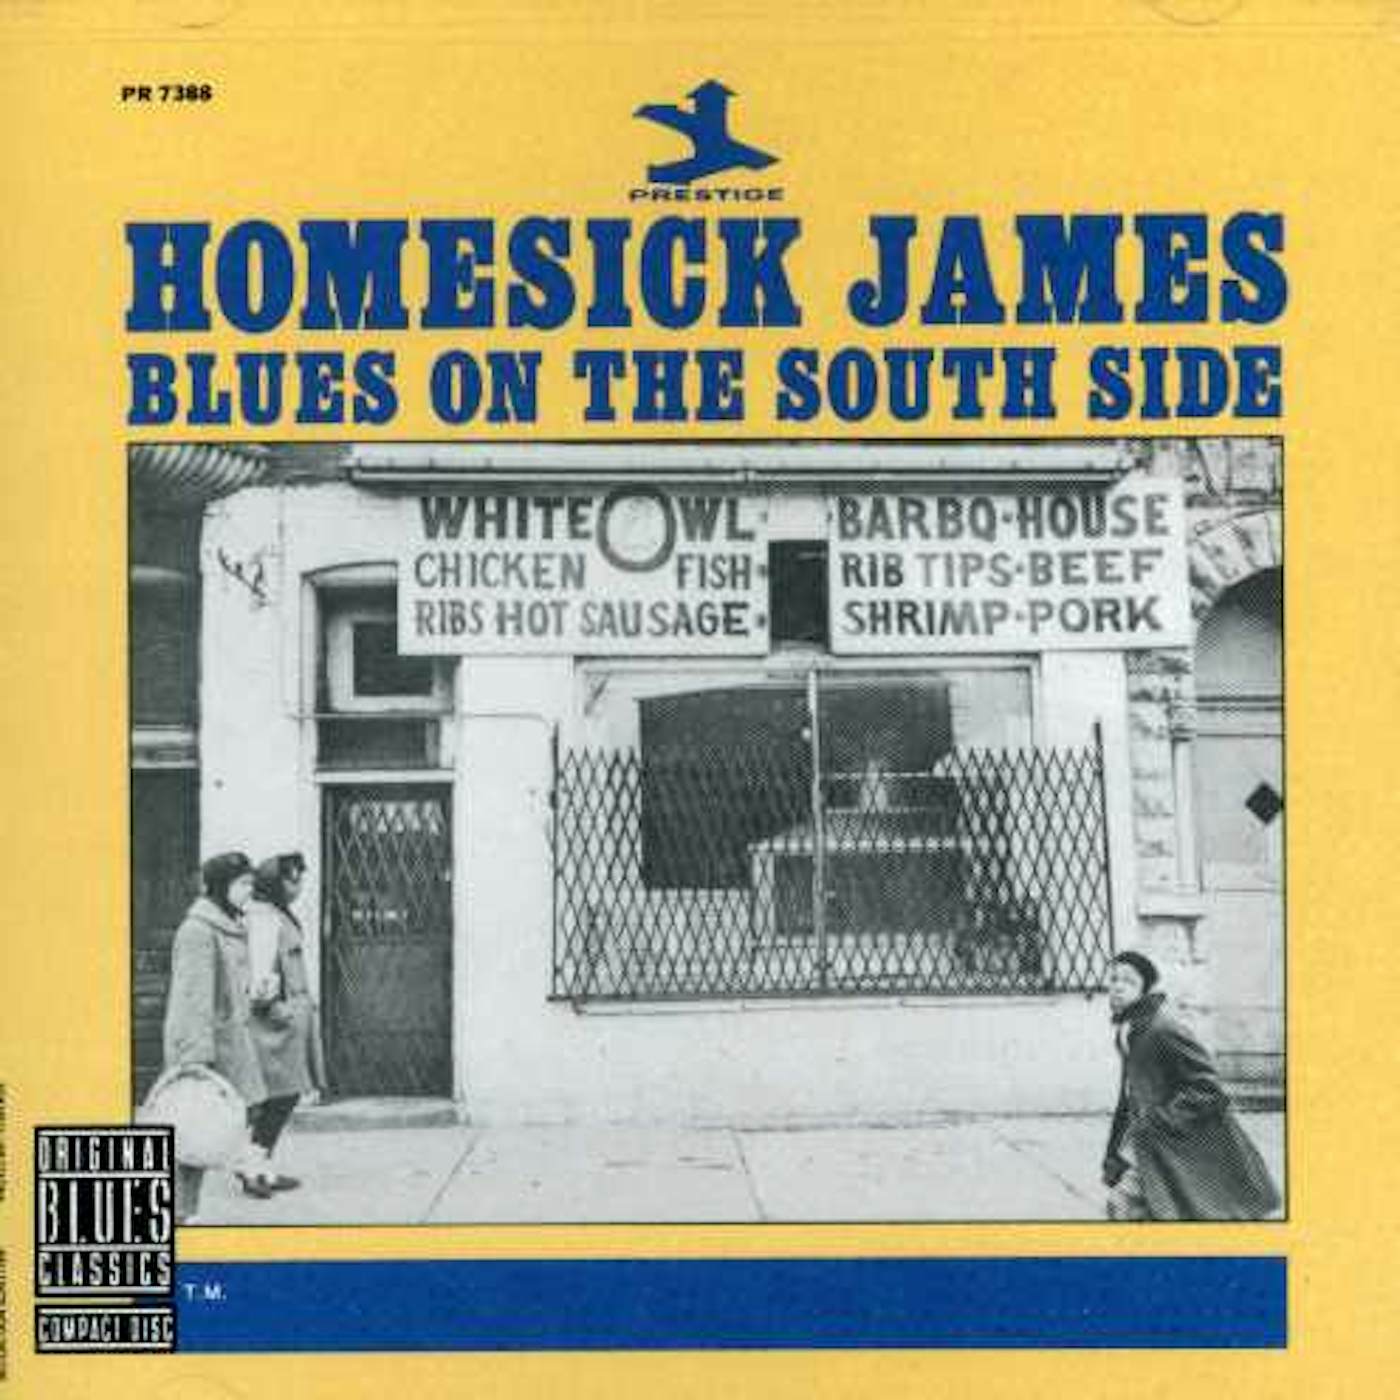 Homesick James BLUES ON THE SOUTHSIDE CD